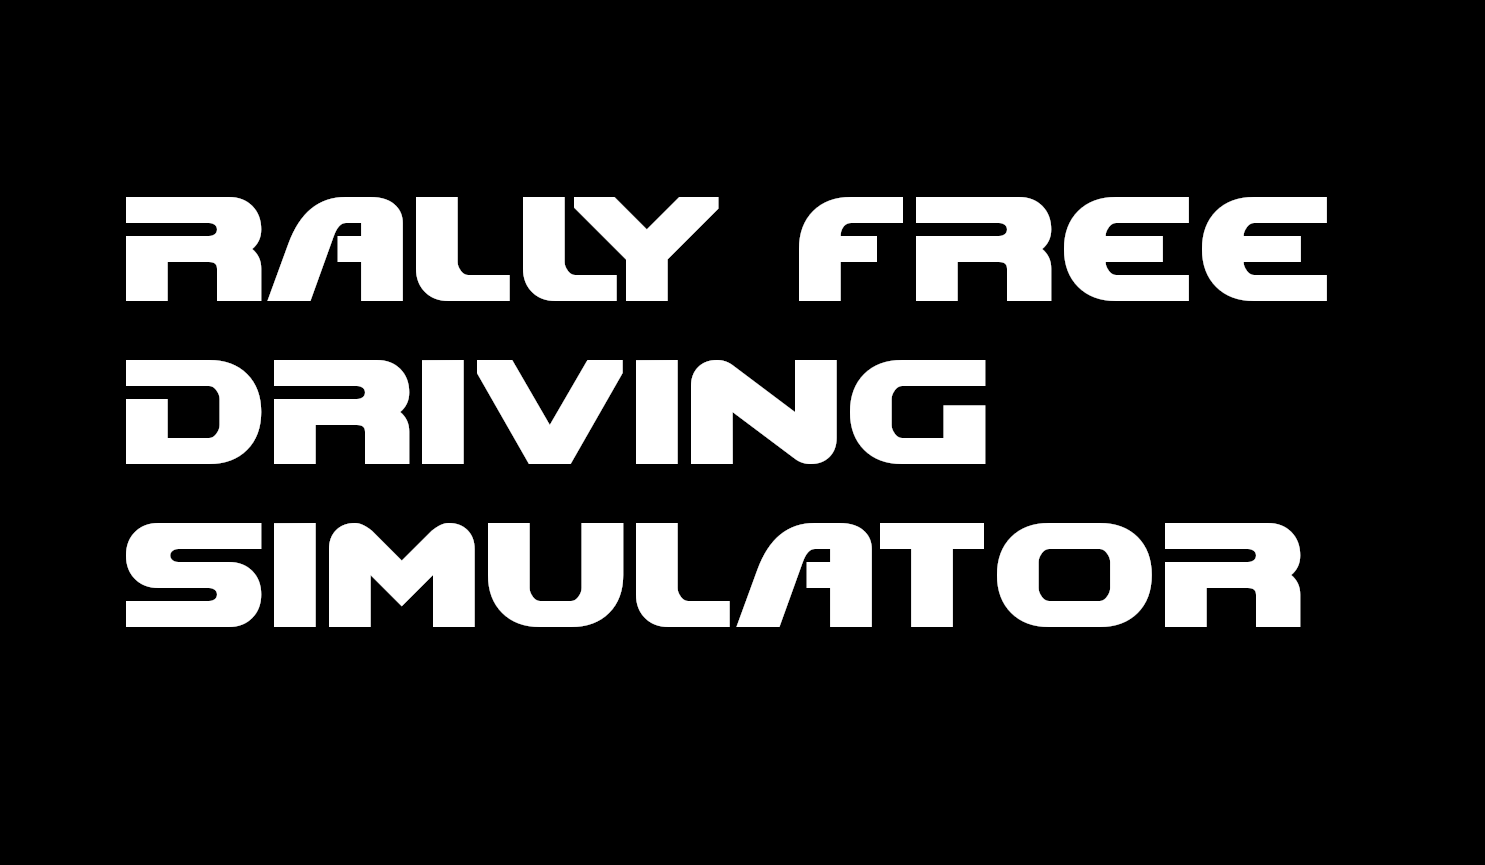 RALLY FREE DRIVING SIMULATOR